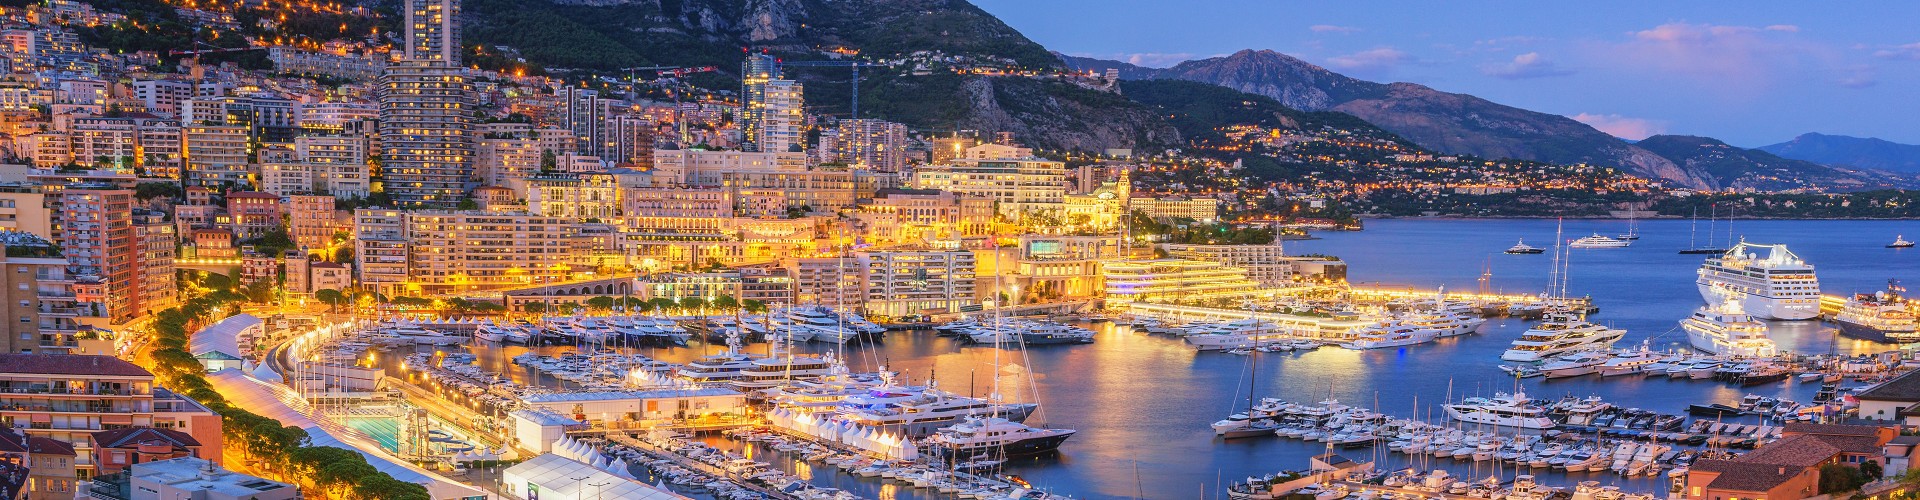 Transfer Tours from Genoa to Santa Margherita | Transfer Tours from Genoa to Monaco